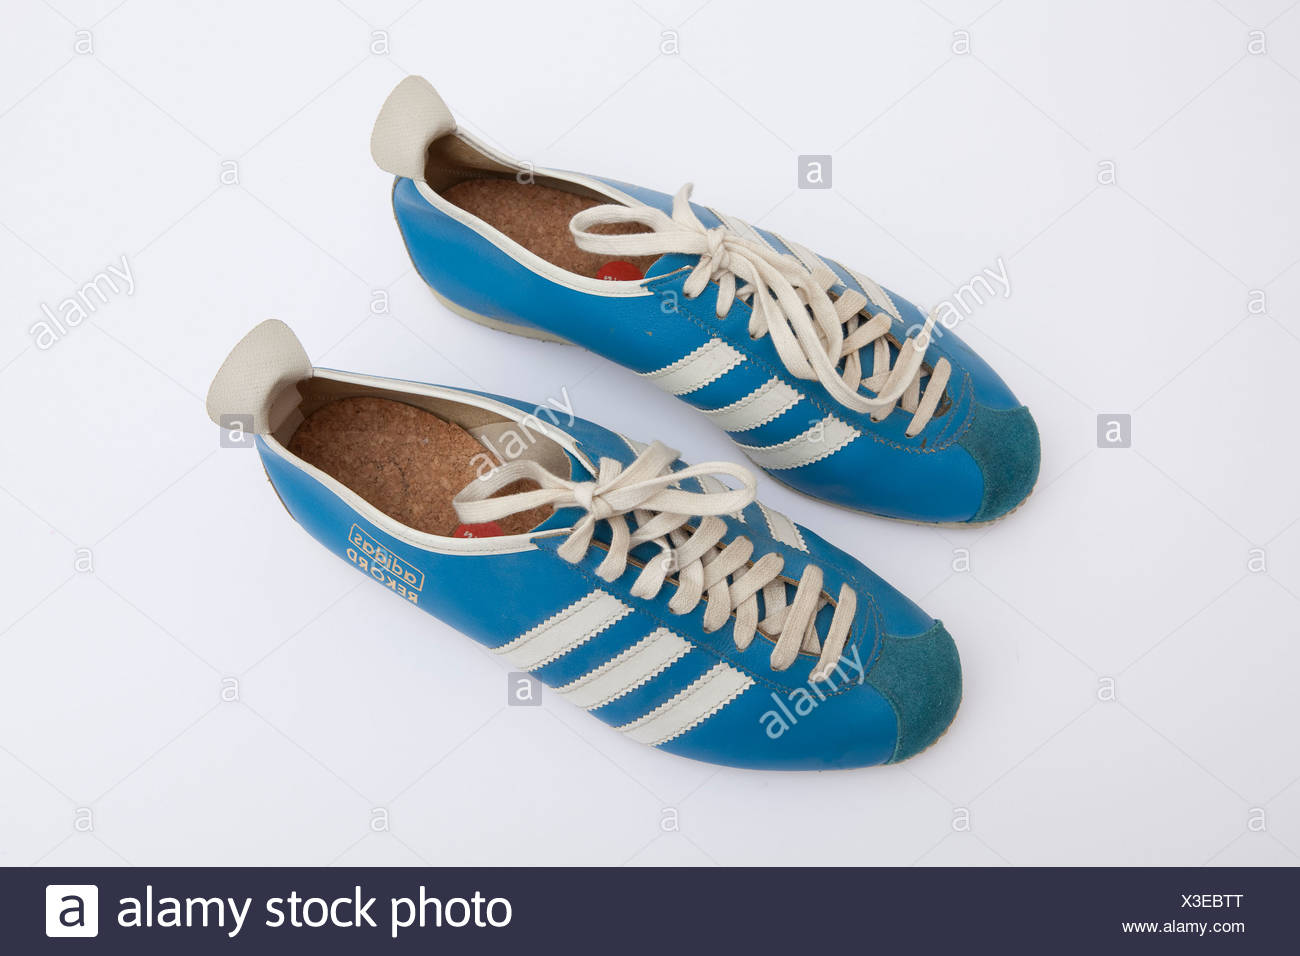 ancienne chaussure adidas